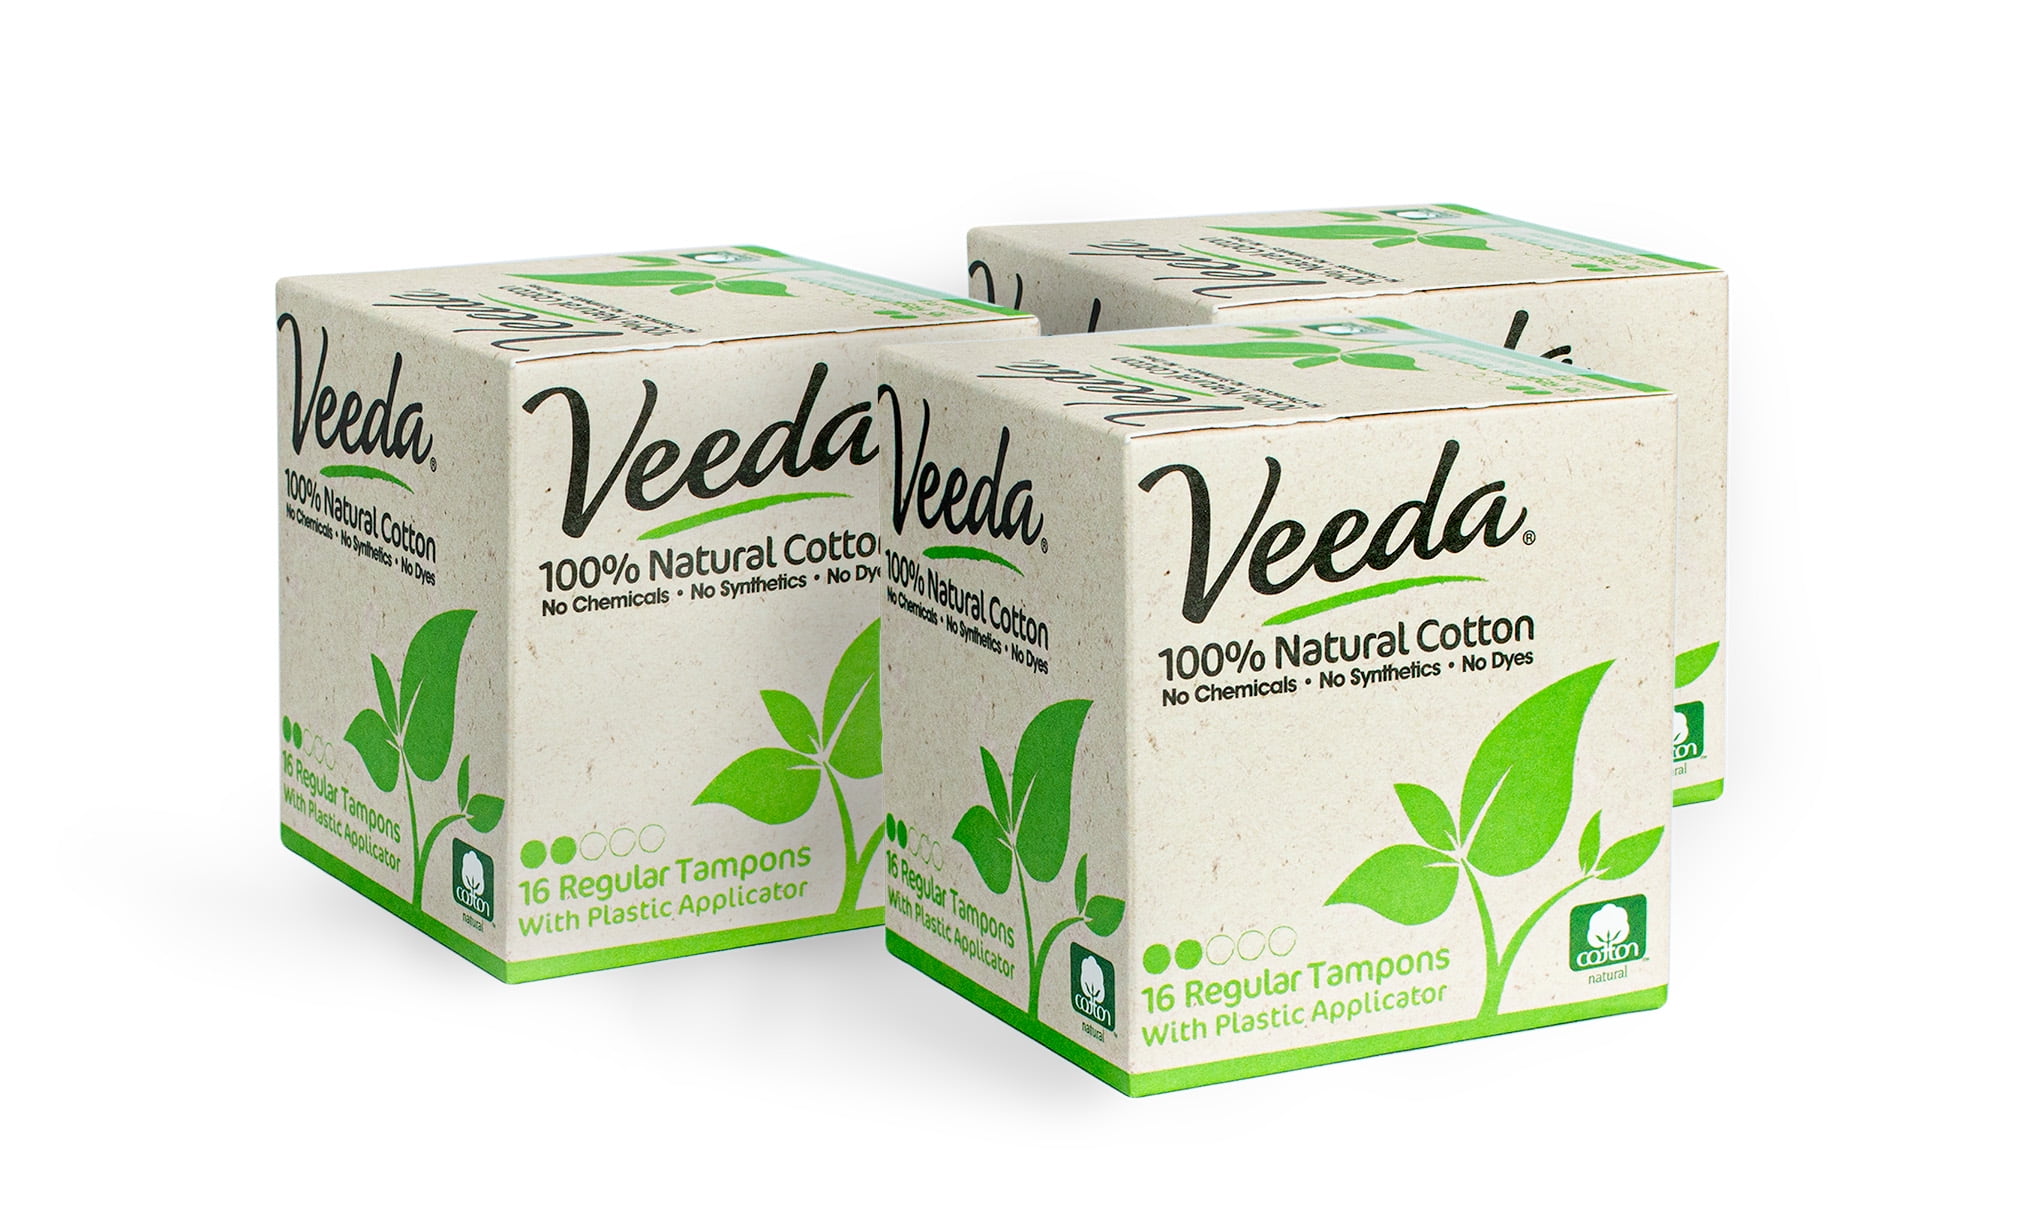 Veeda GMO-Free 100% Natural Cotton Applicator-Free Super Tampons